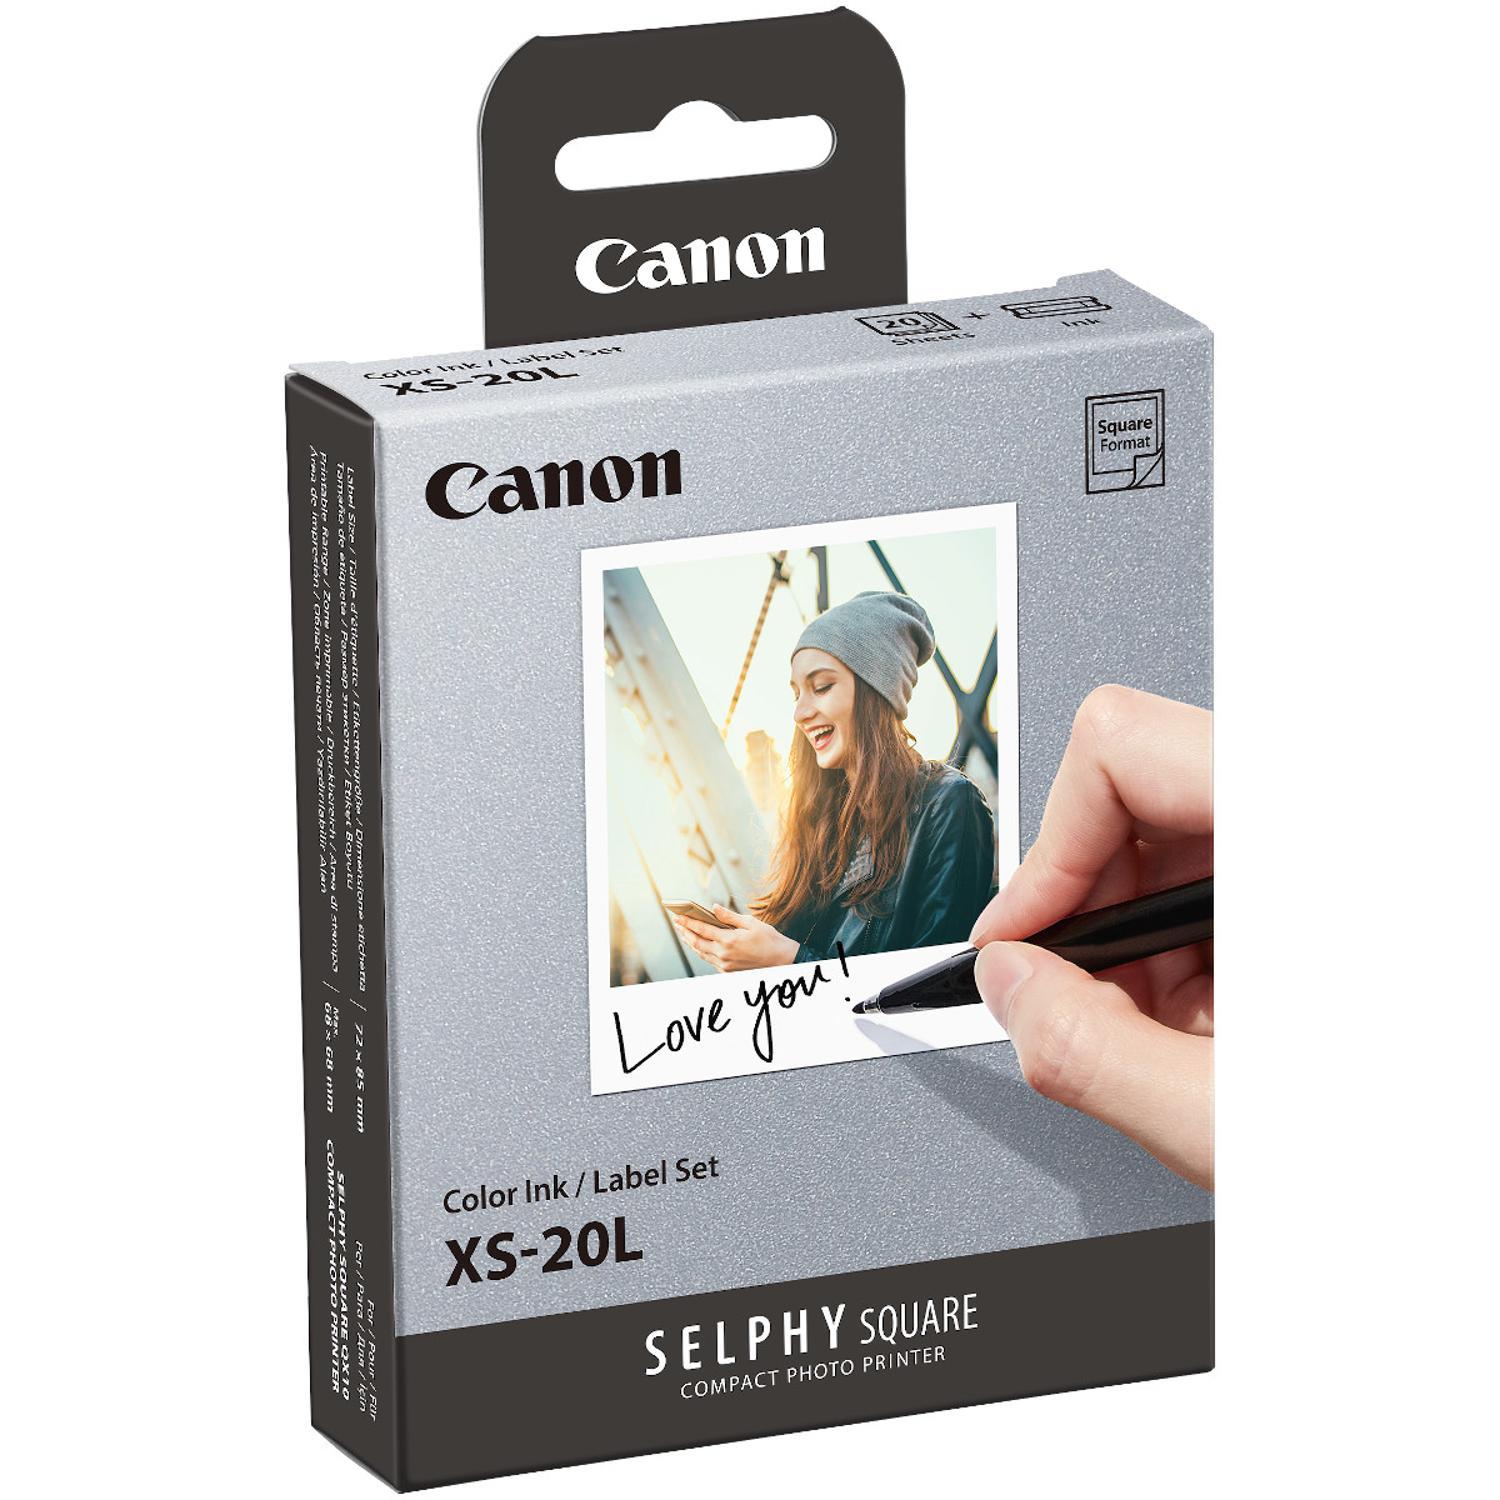 Canon XS-20L Set mit Farbtinte u.Sticker